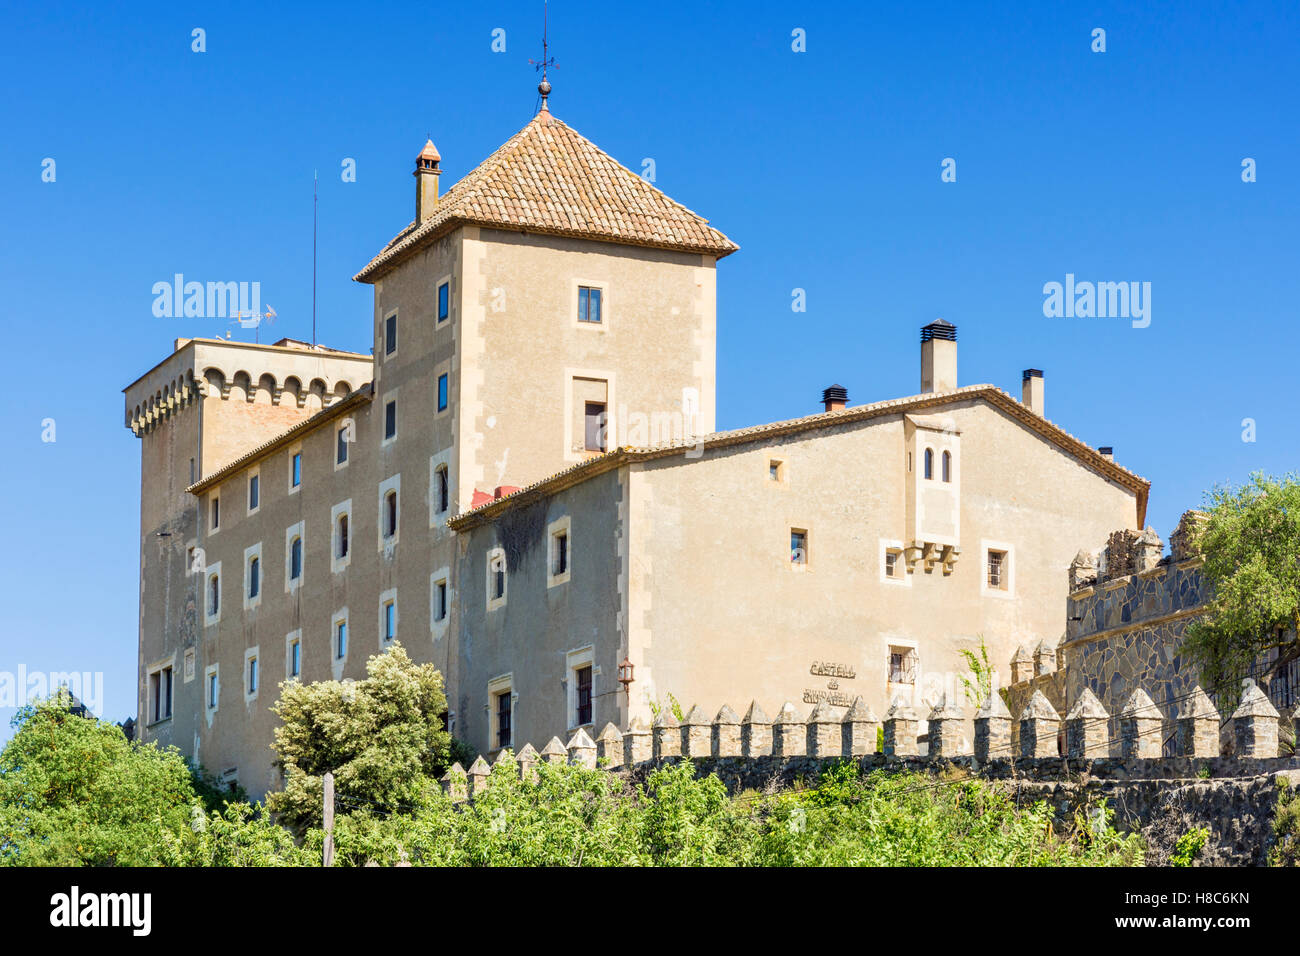 Das befestigte Haus Castell de Riudabella, Vimbodí, Tarragona, Spanien Stockfoto